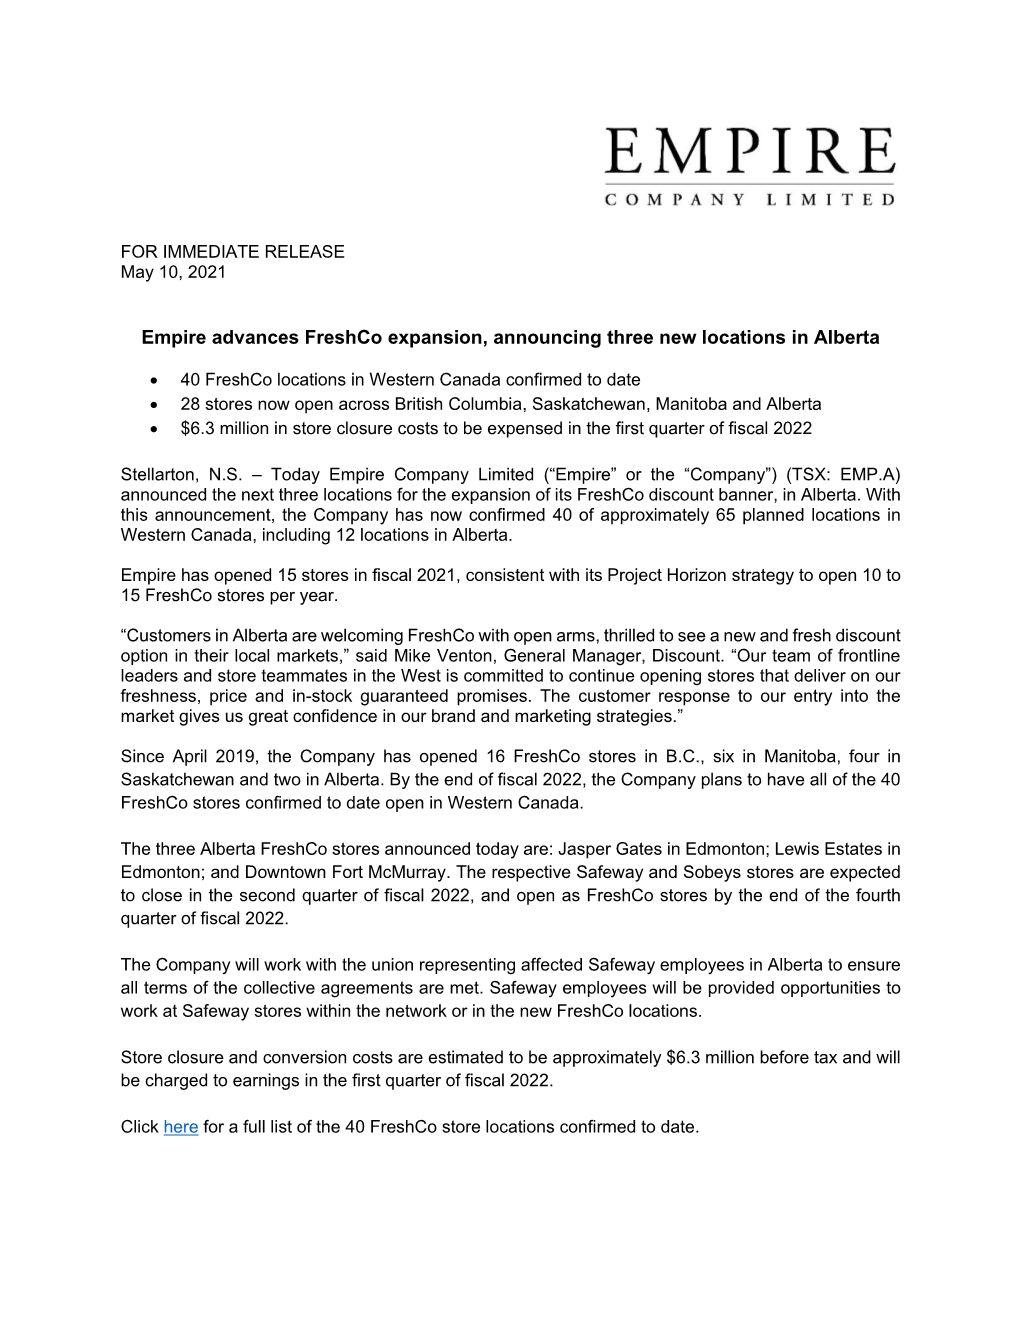 Empire Advances Freshco Expansion, Announcing Three New Locations in Alberta